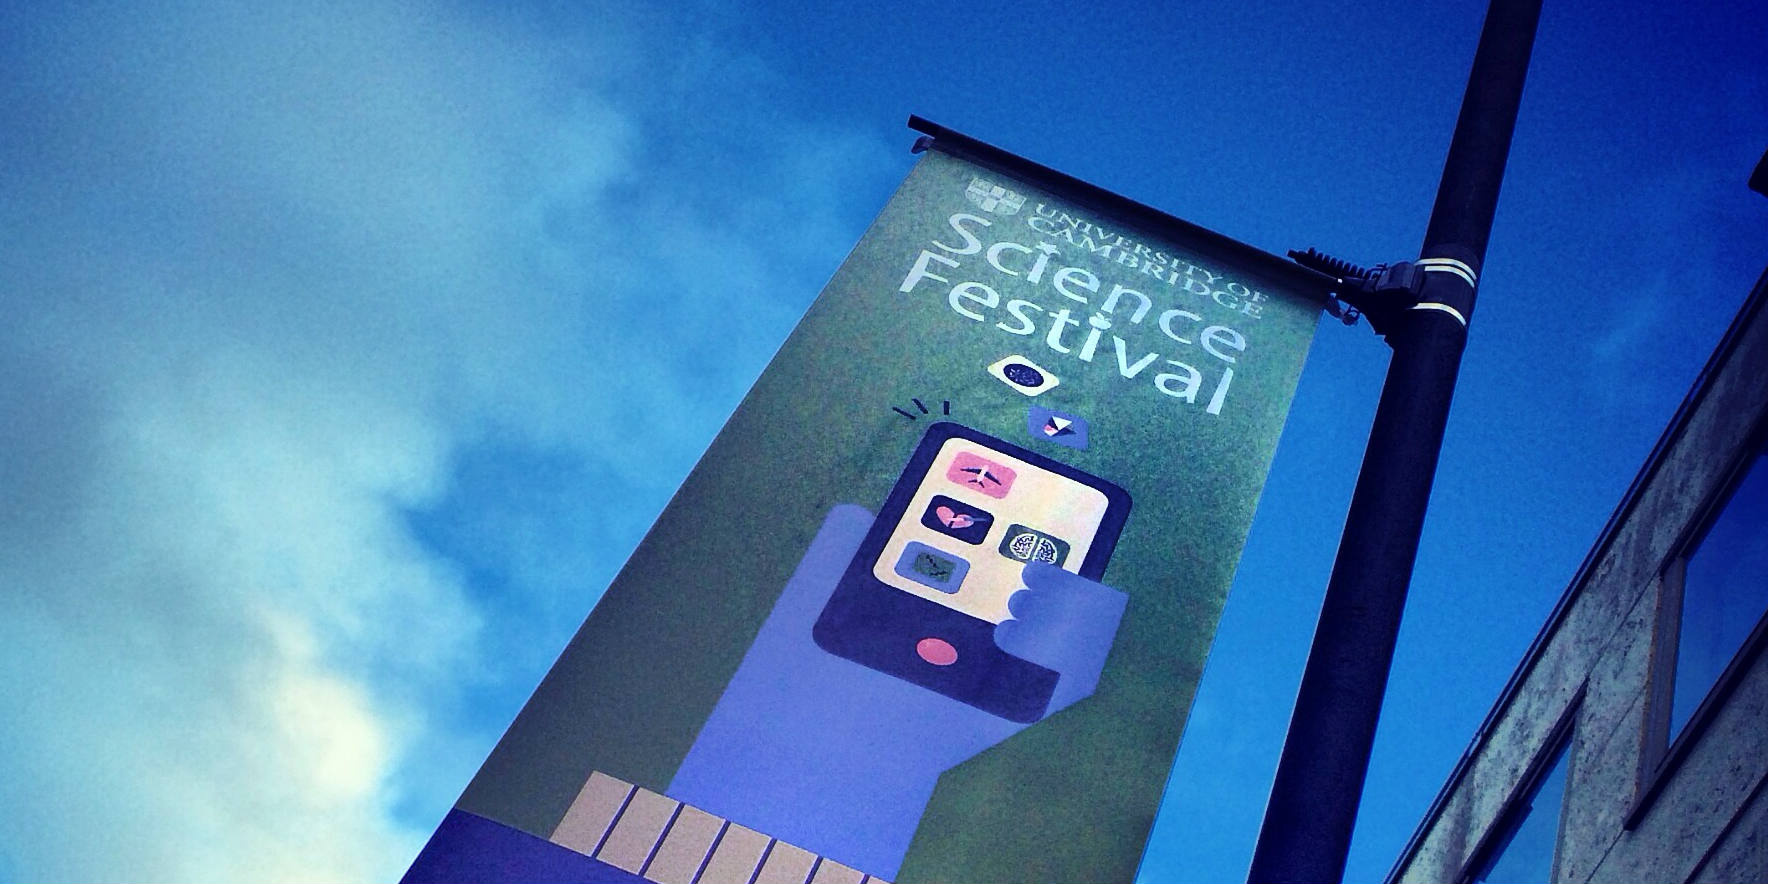 University of Cambridge photo archive: Science Festival 2014 banner